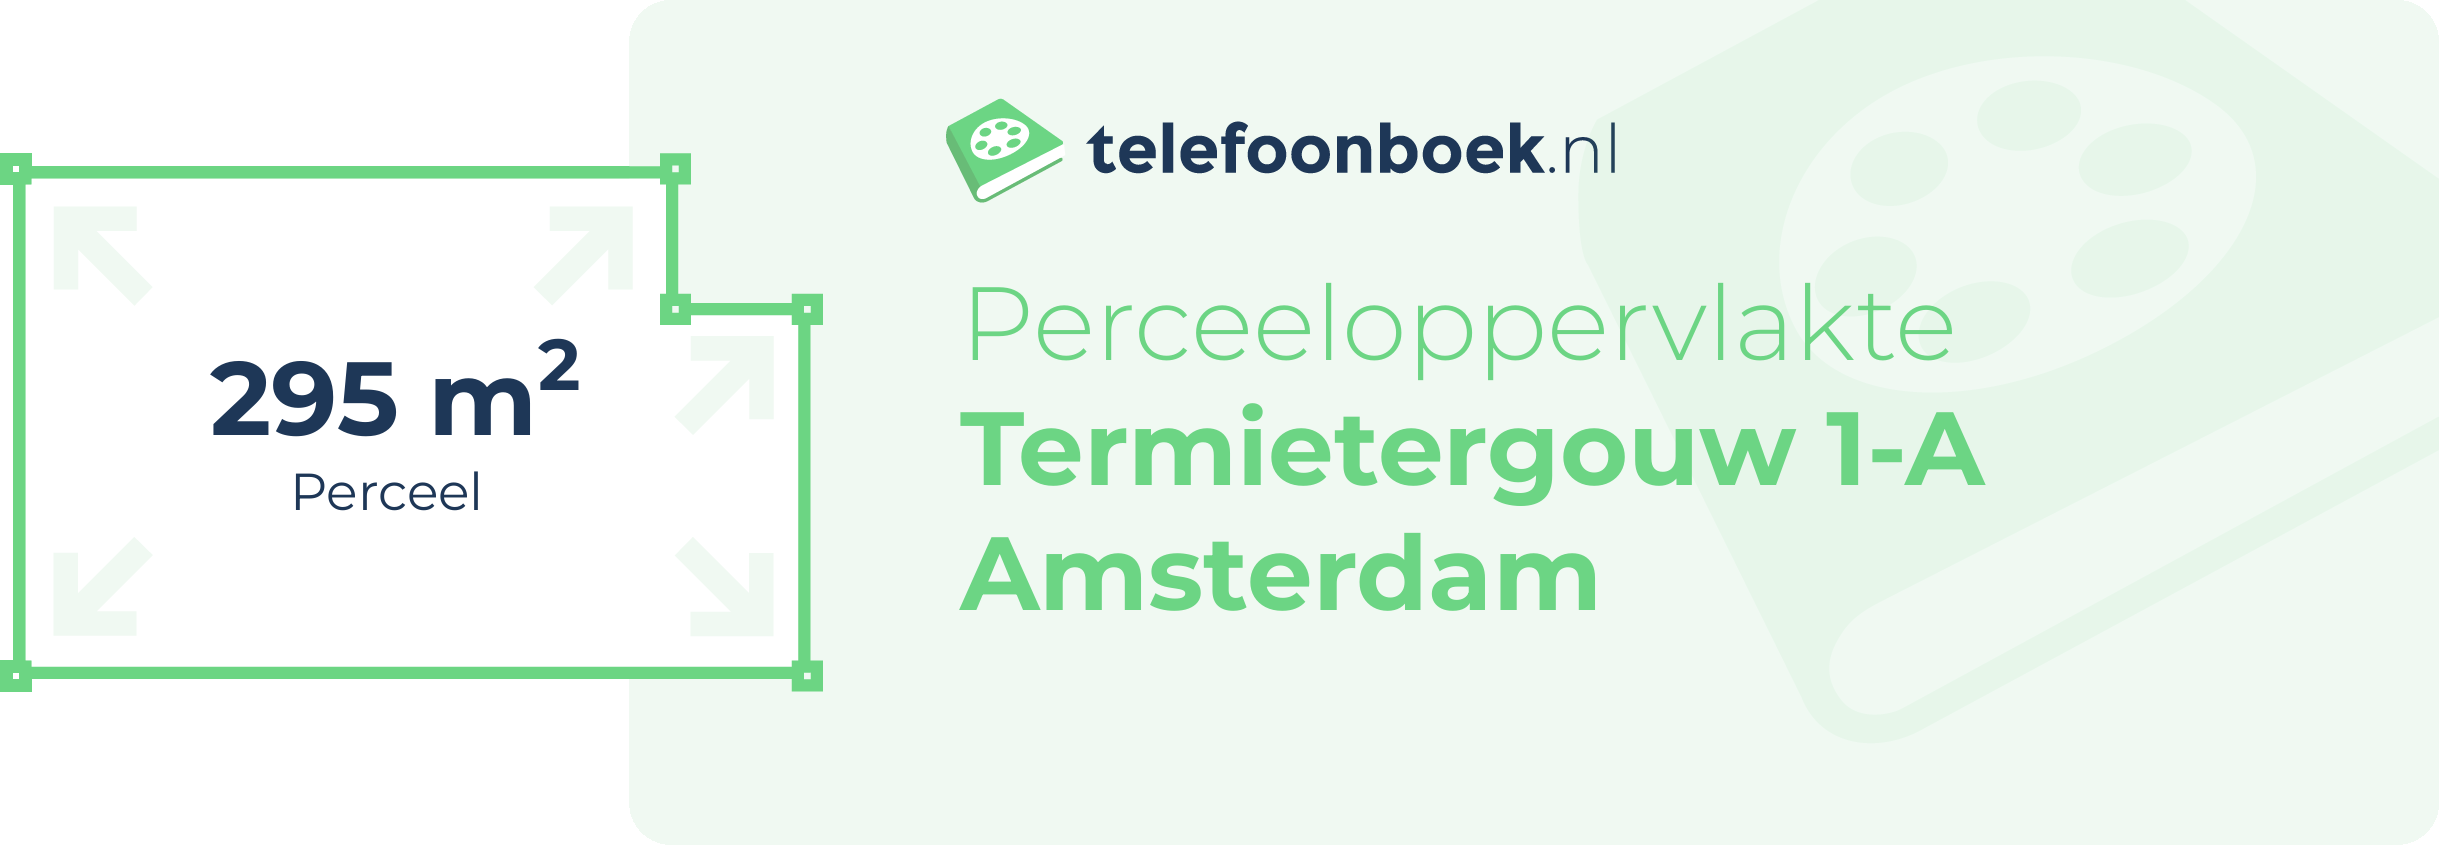 Perceeloppervlakte Termietergouw 1-A Amsterdam